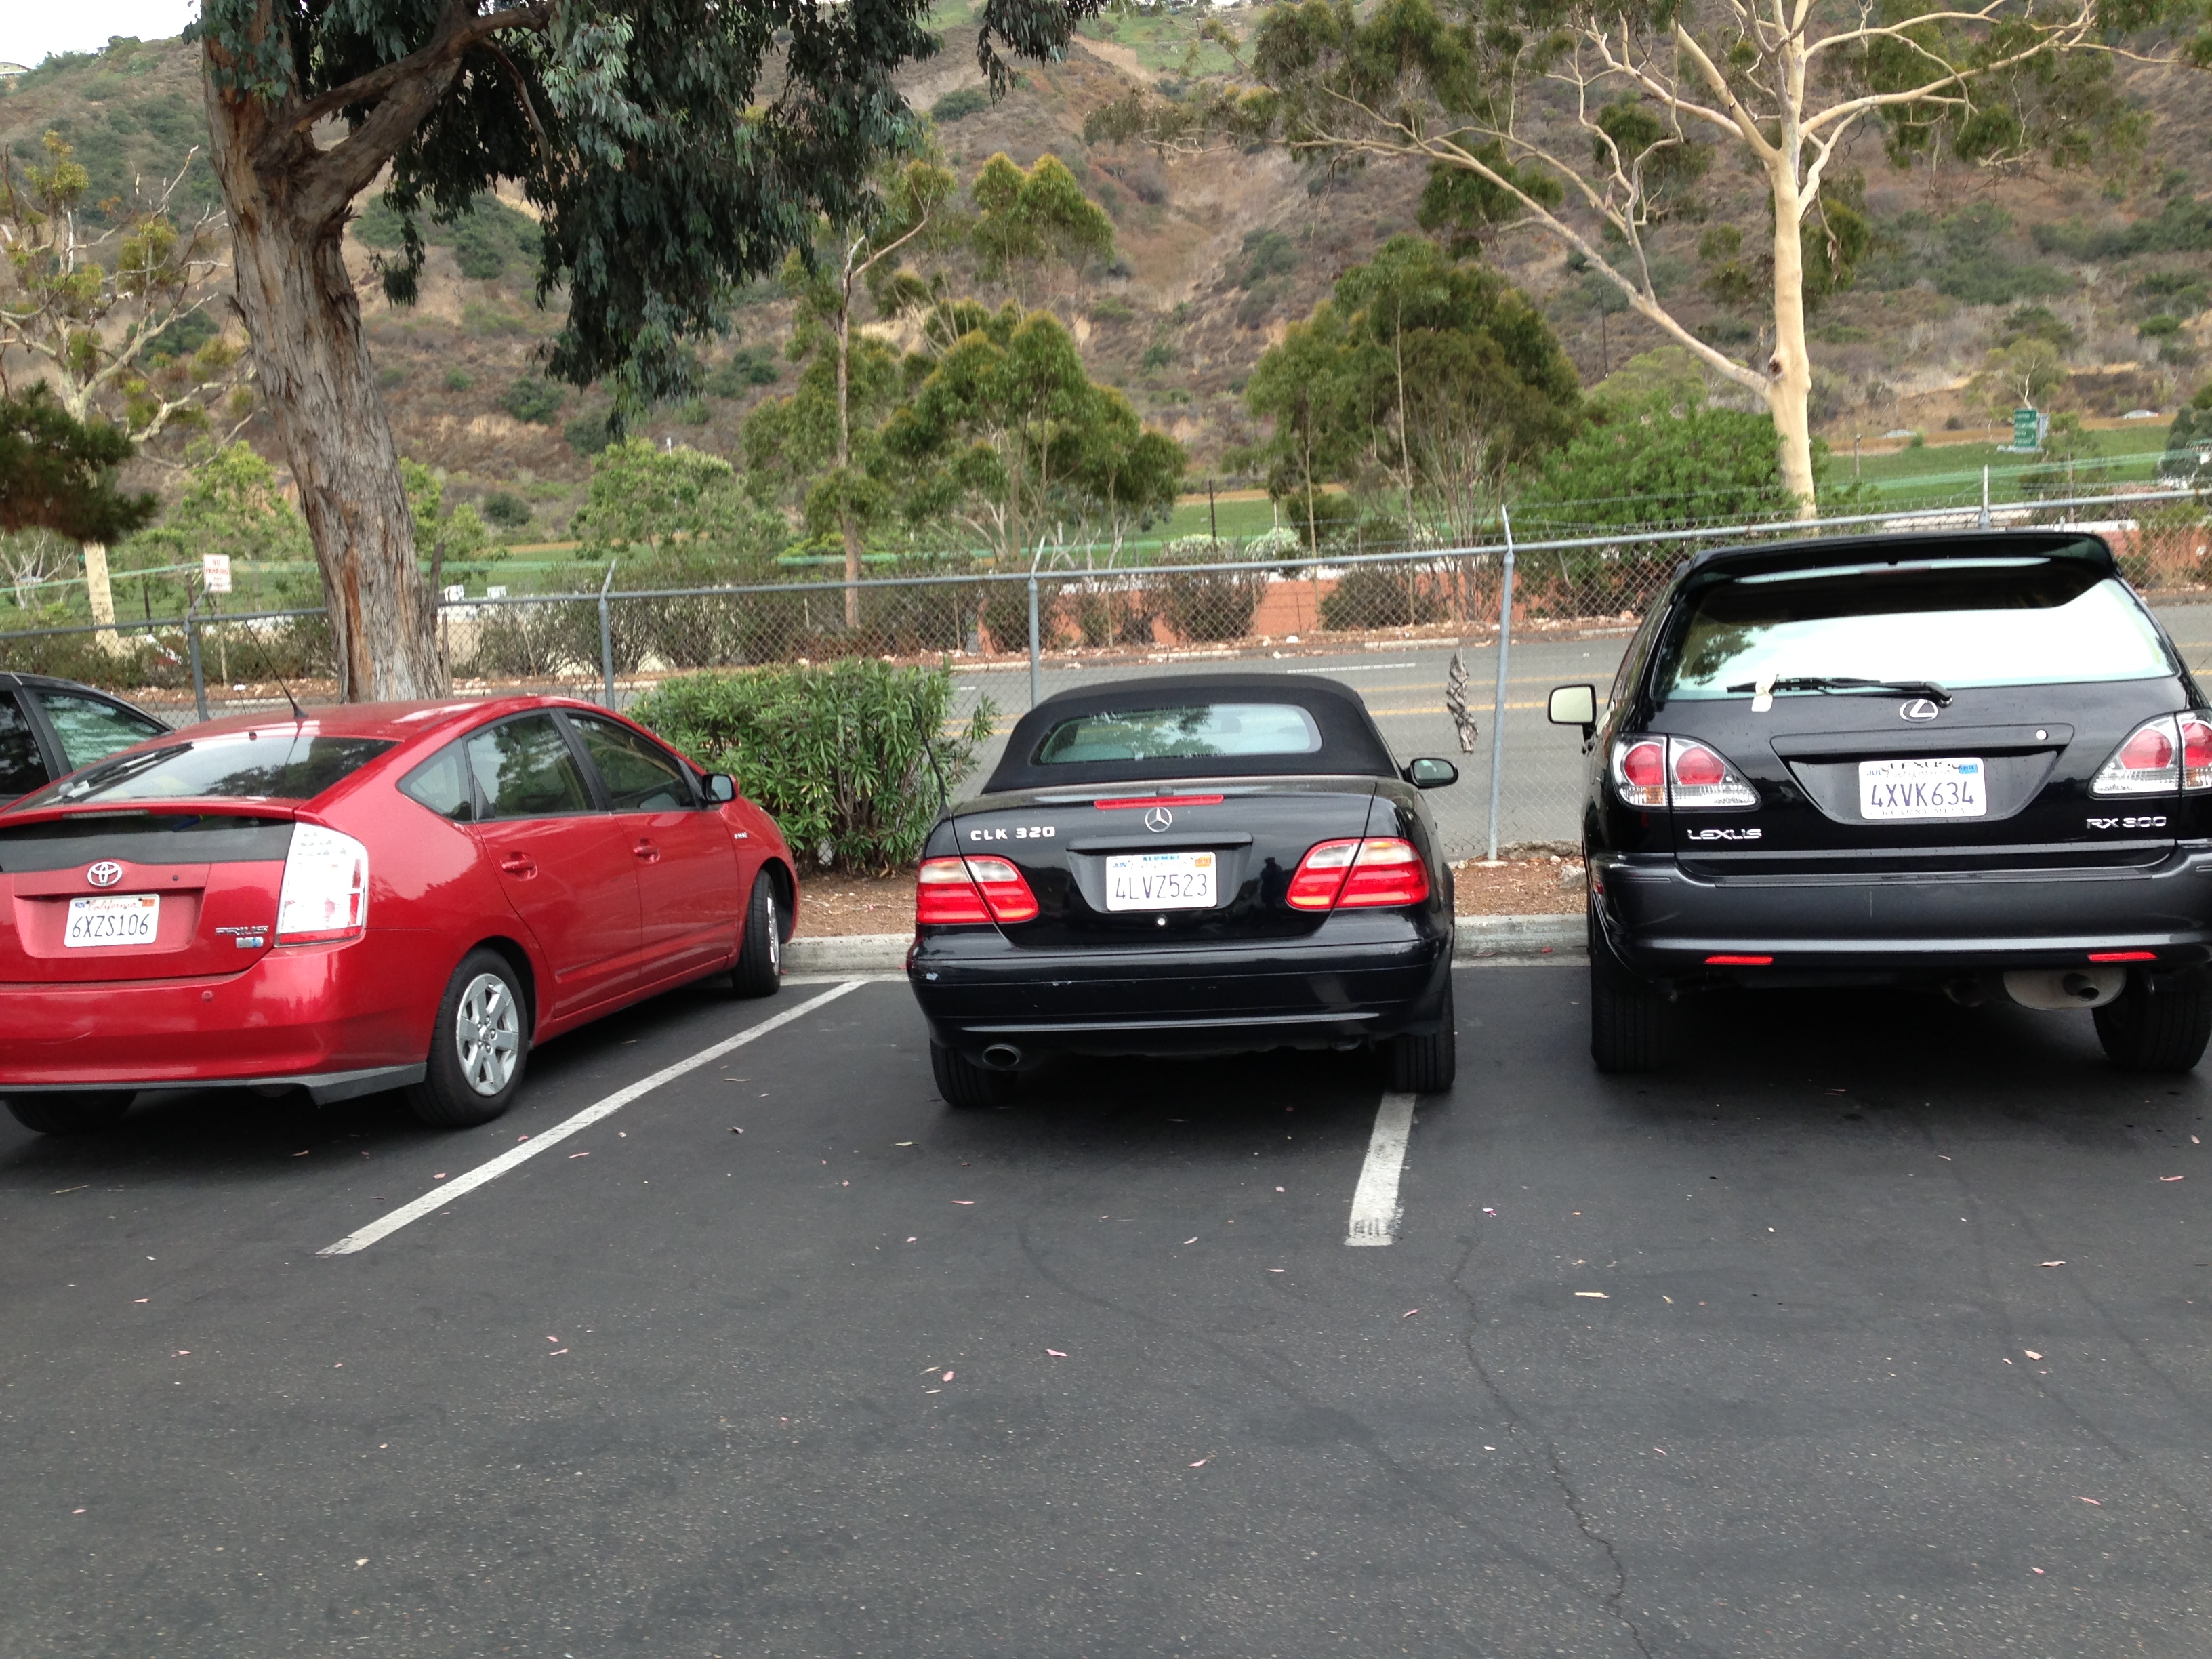 File:Bad car parking.jpg - Wikipedia